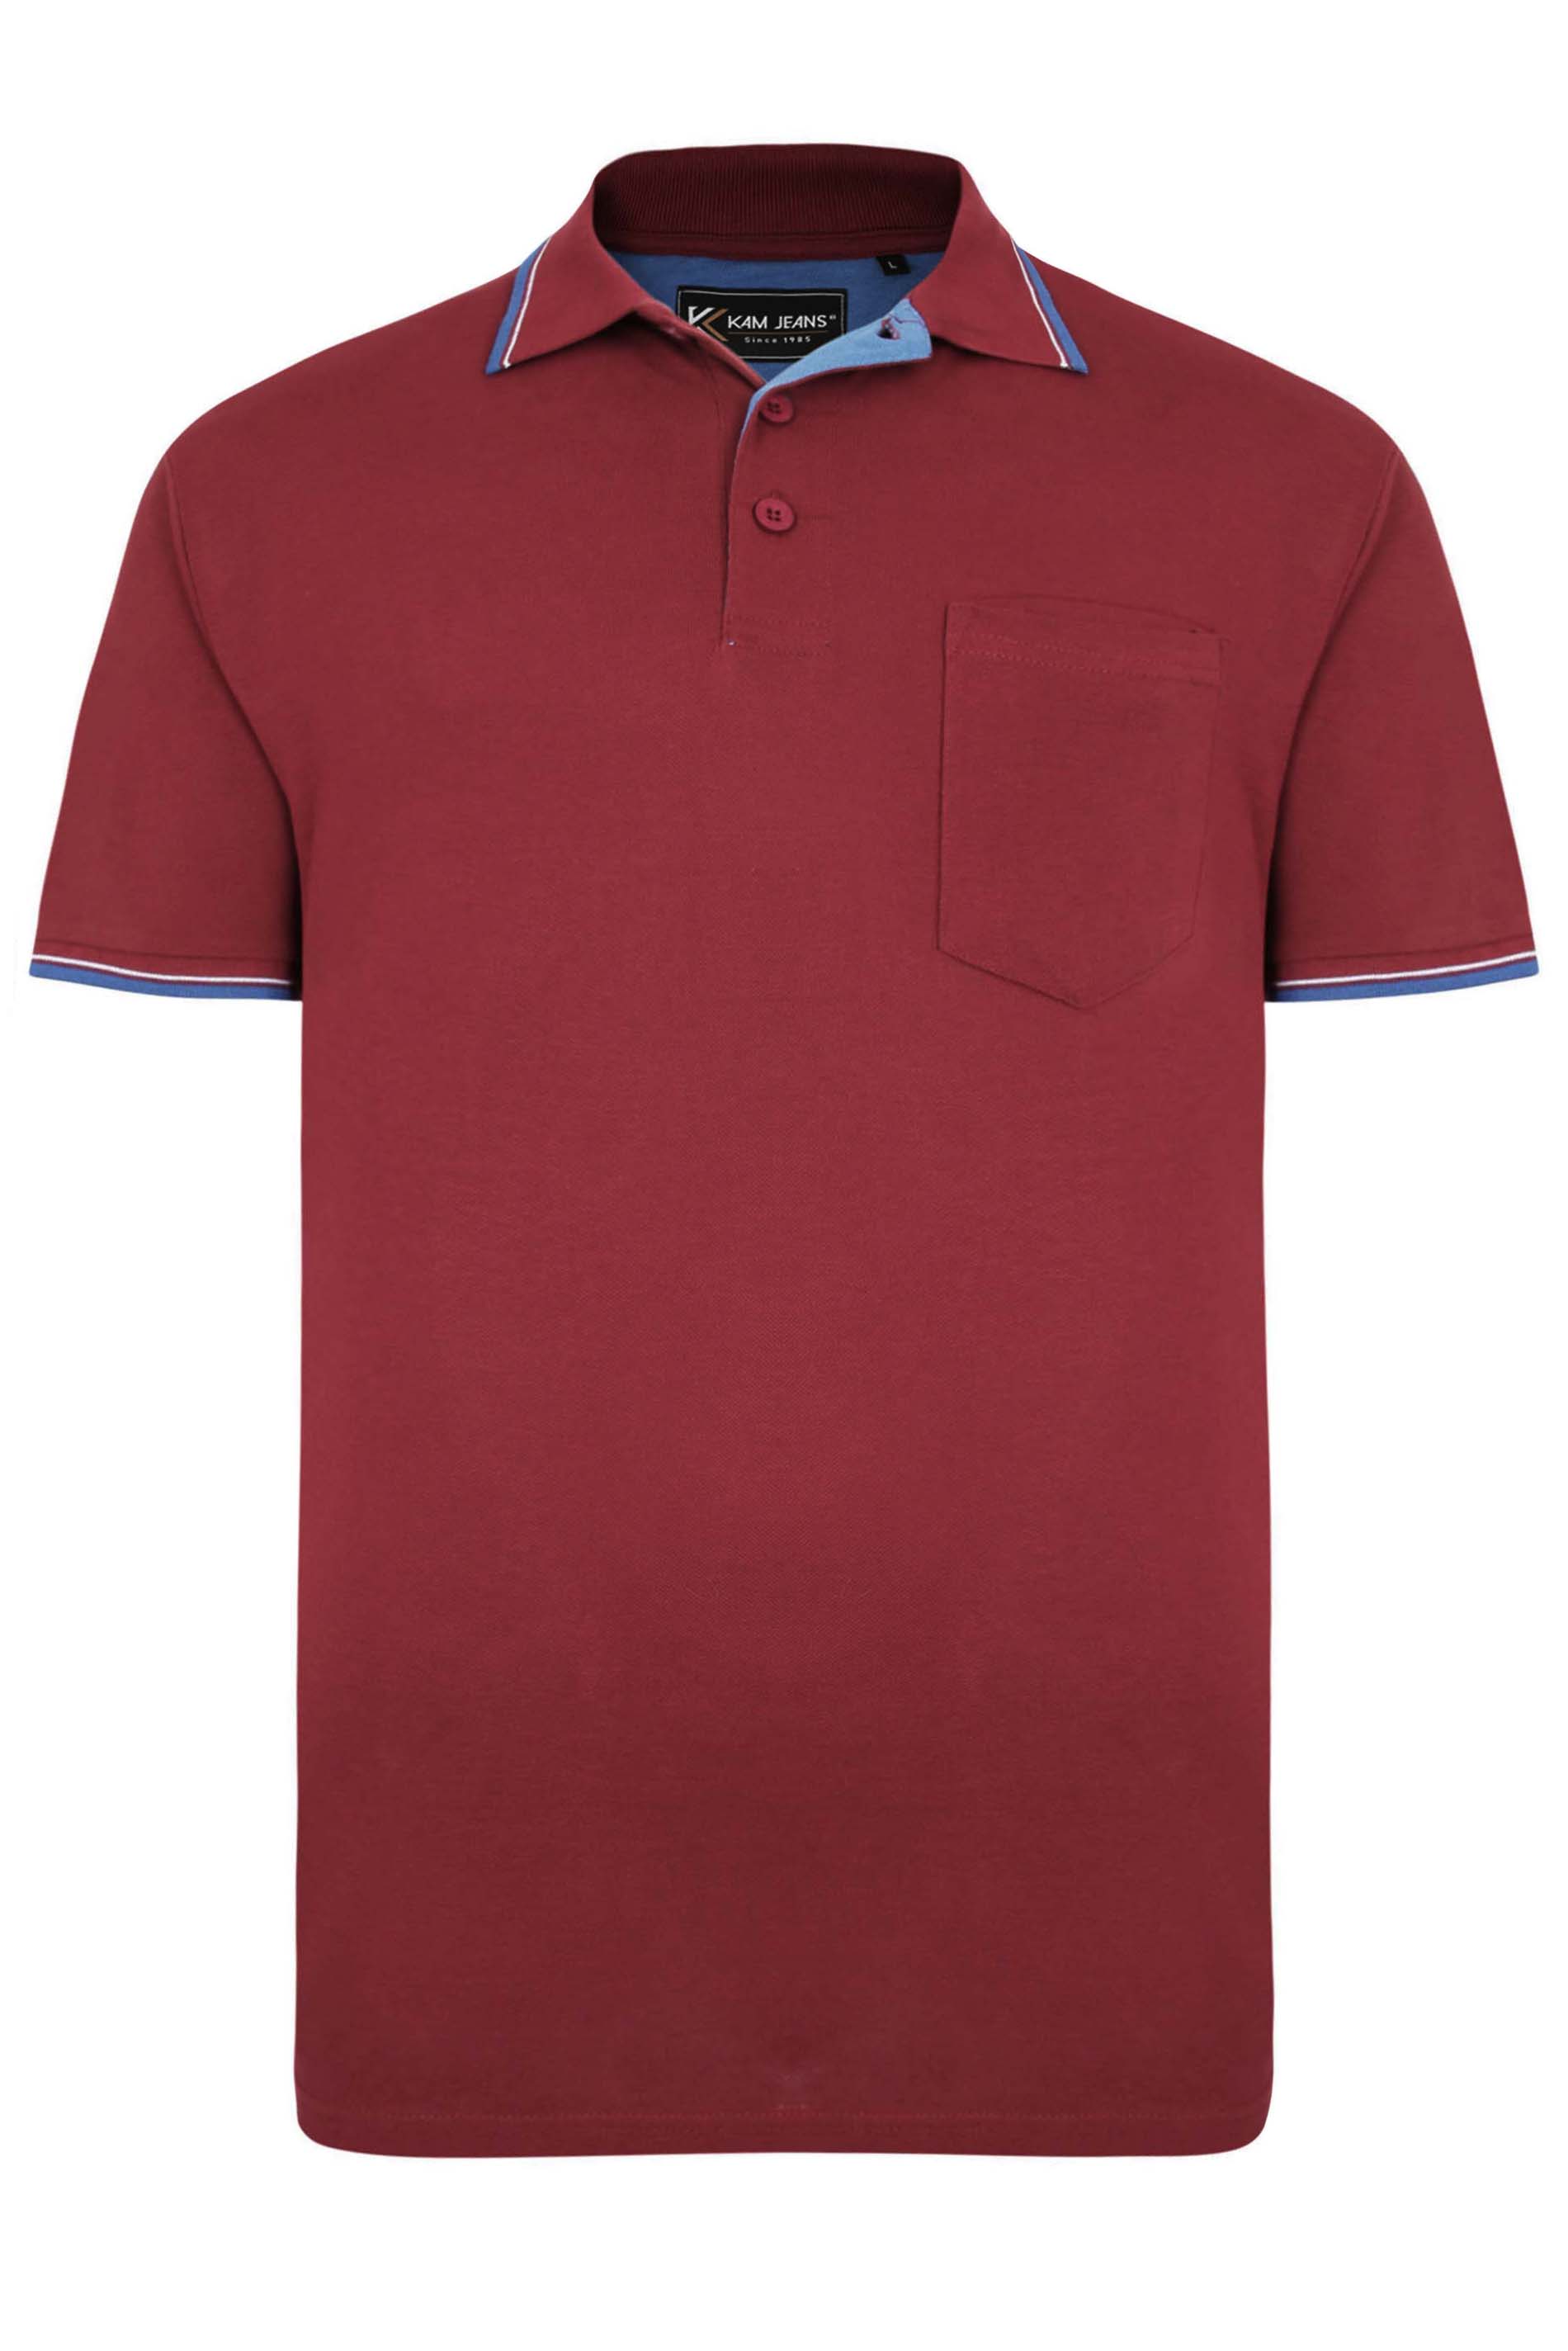 KAM Burgundy Red Tipped Polo Shirt | BadRhino 2